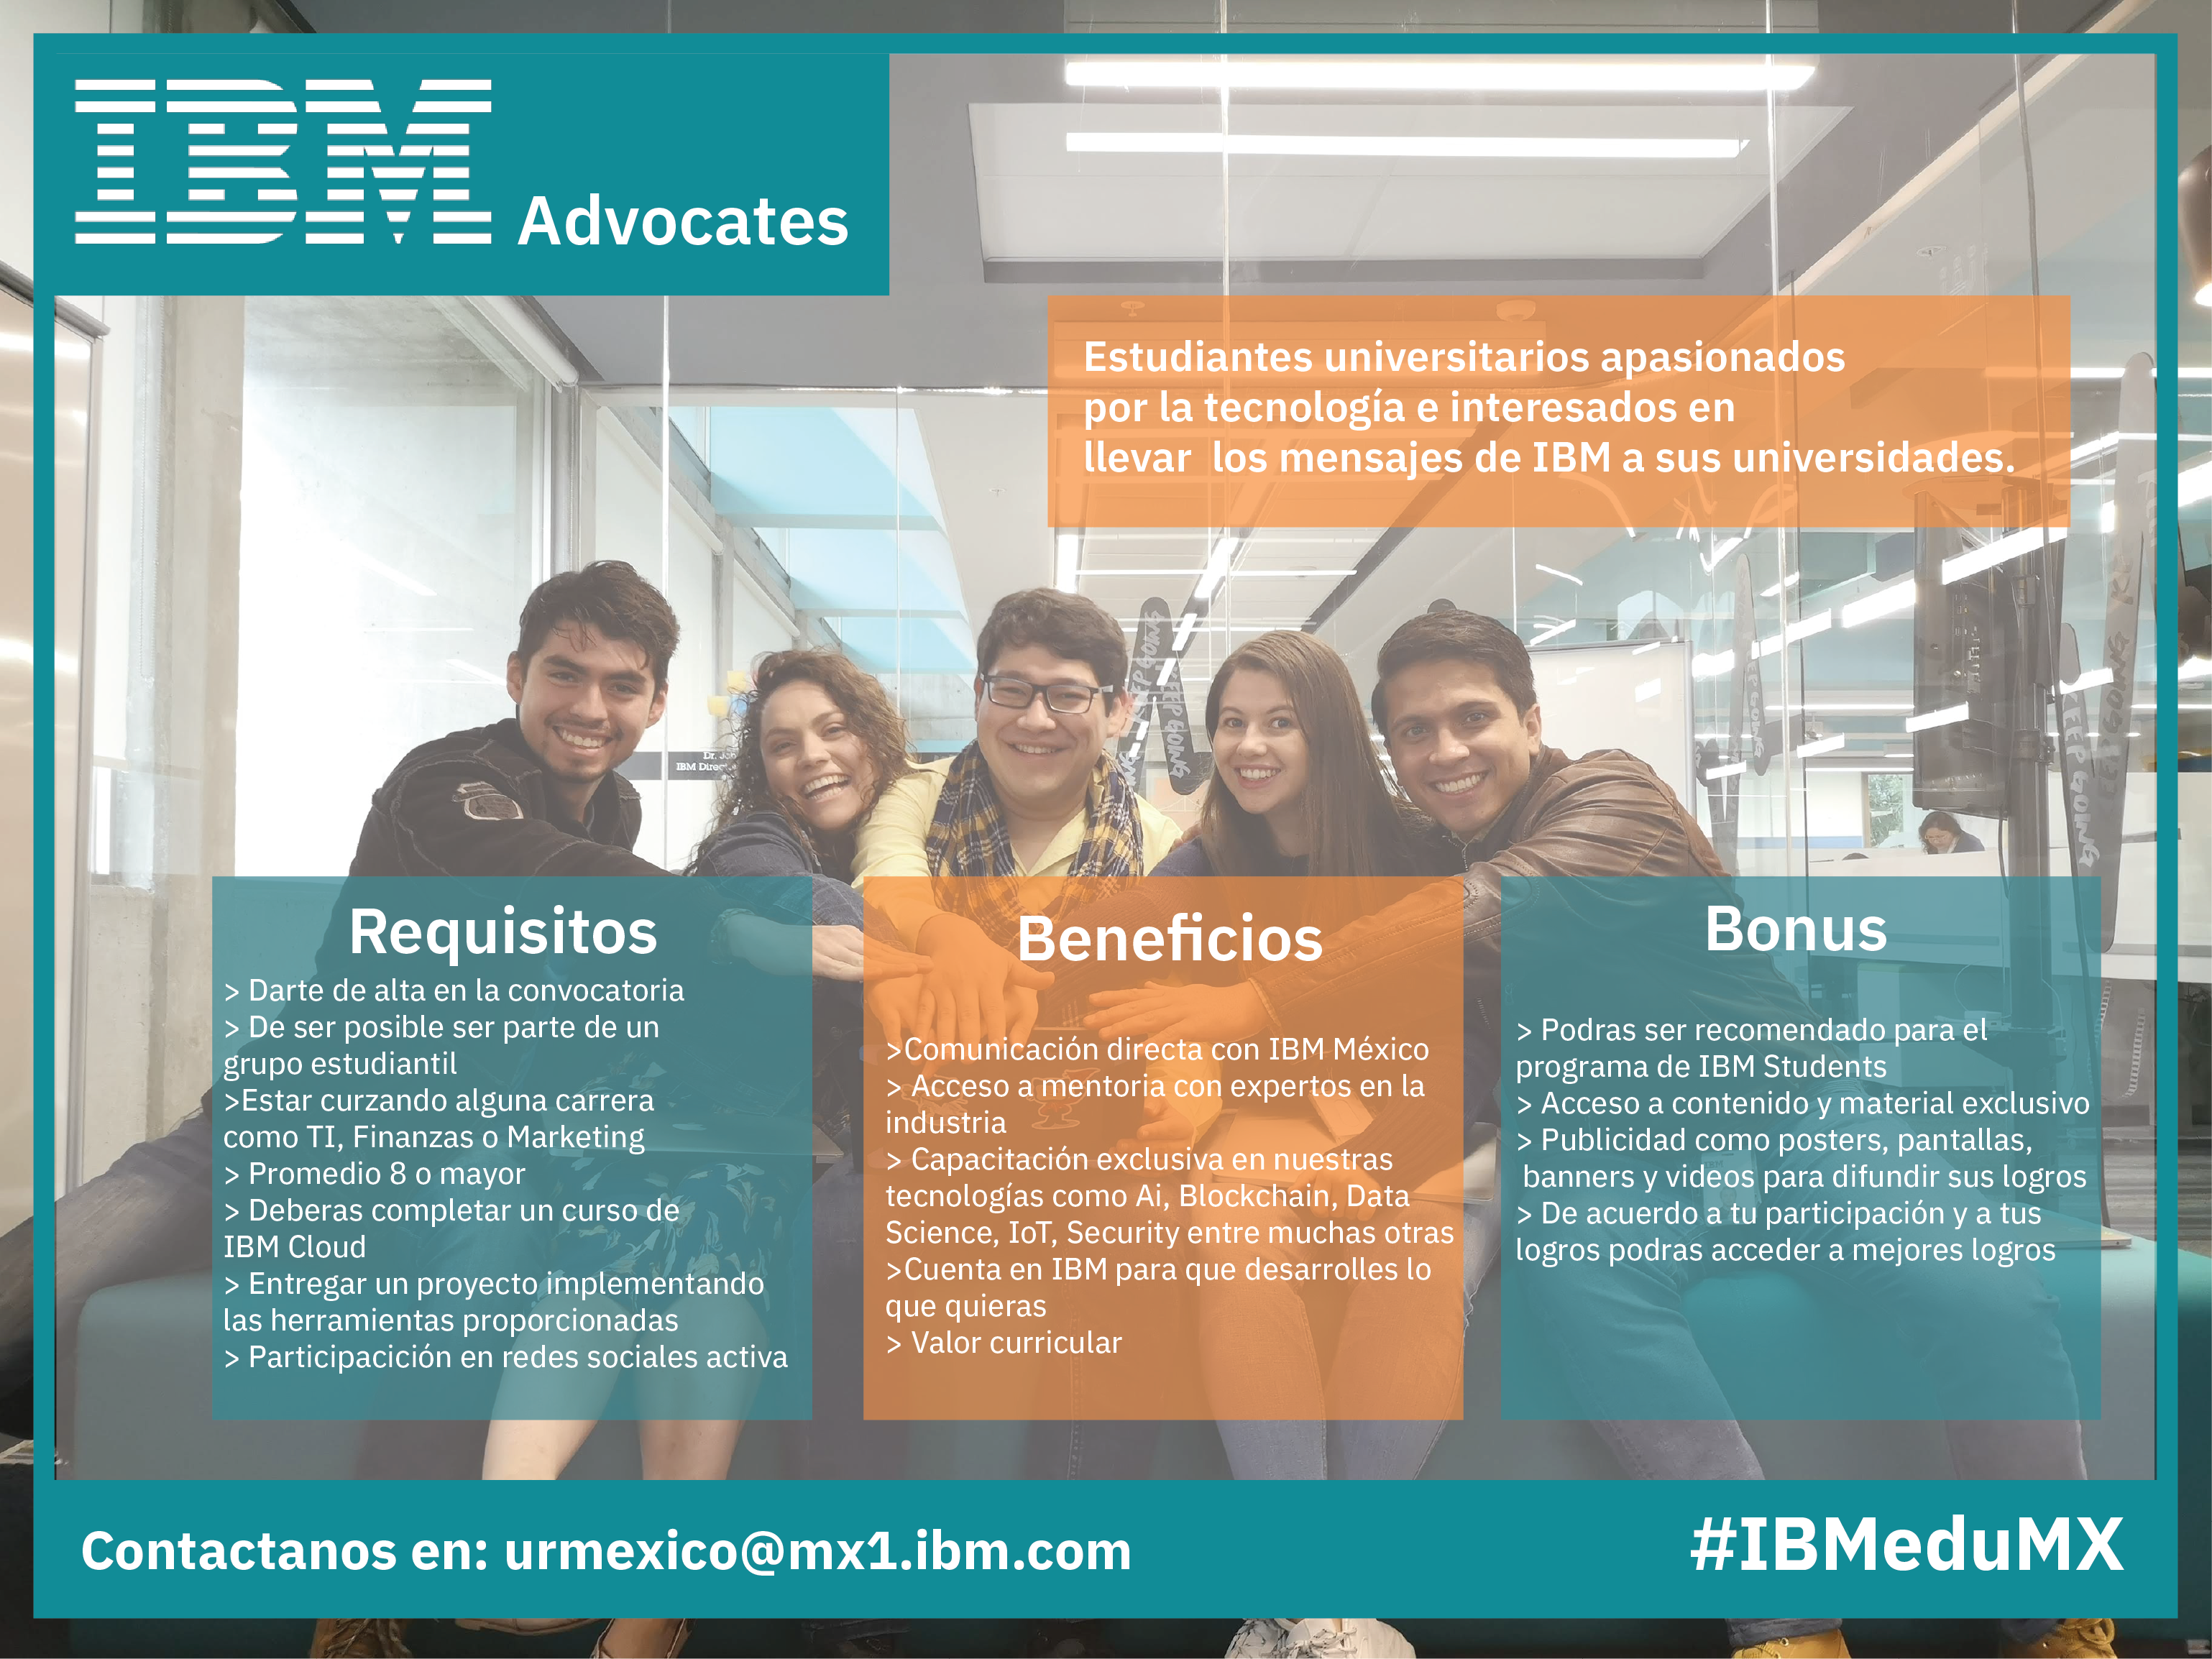 IBM educates